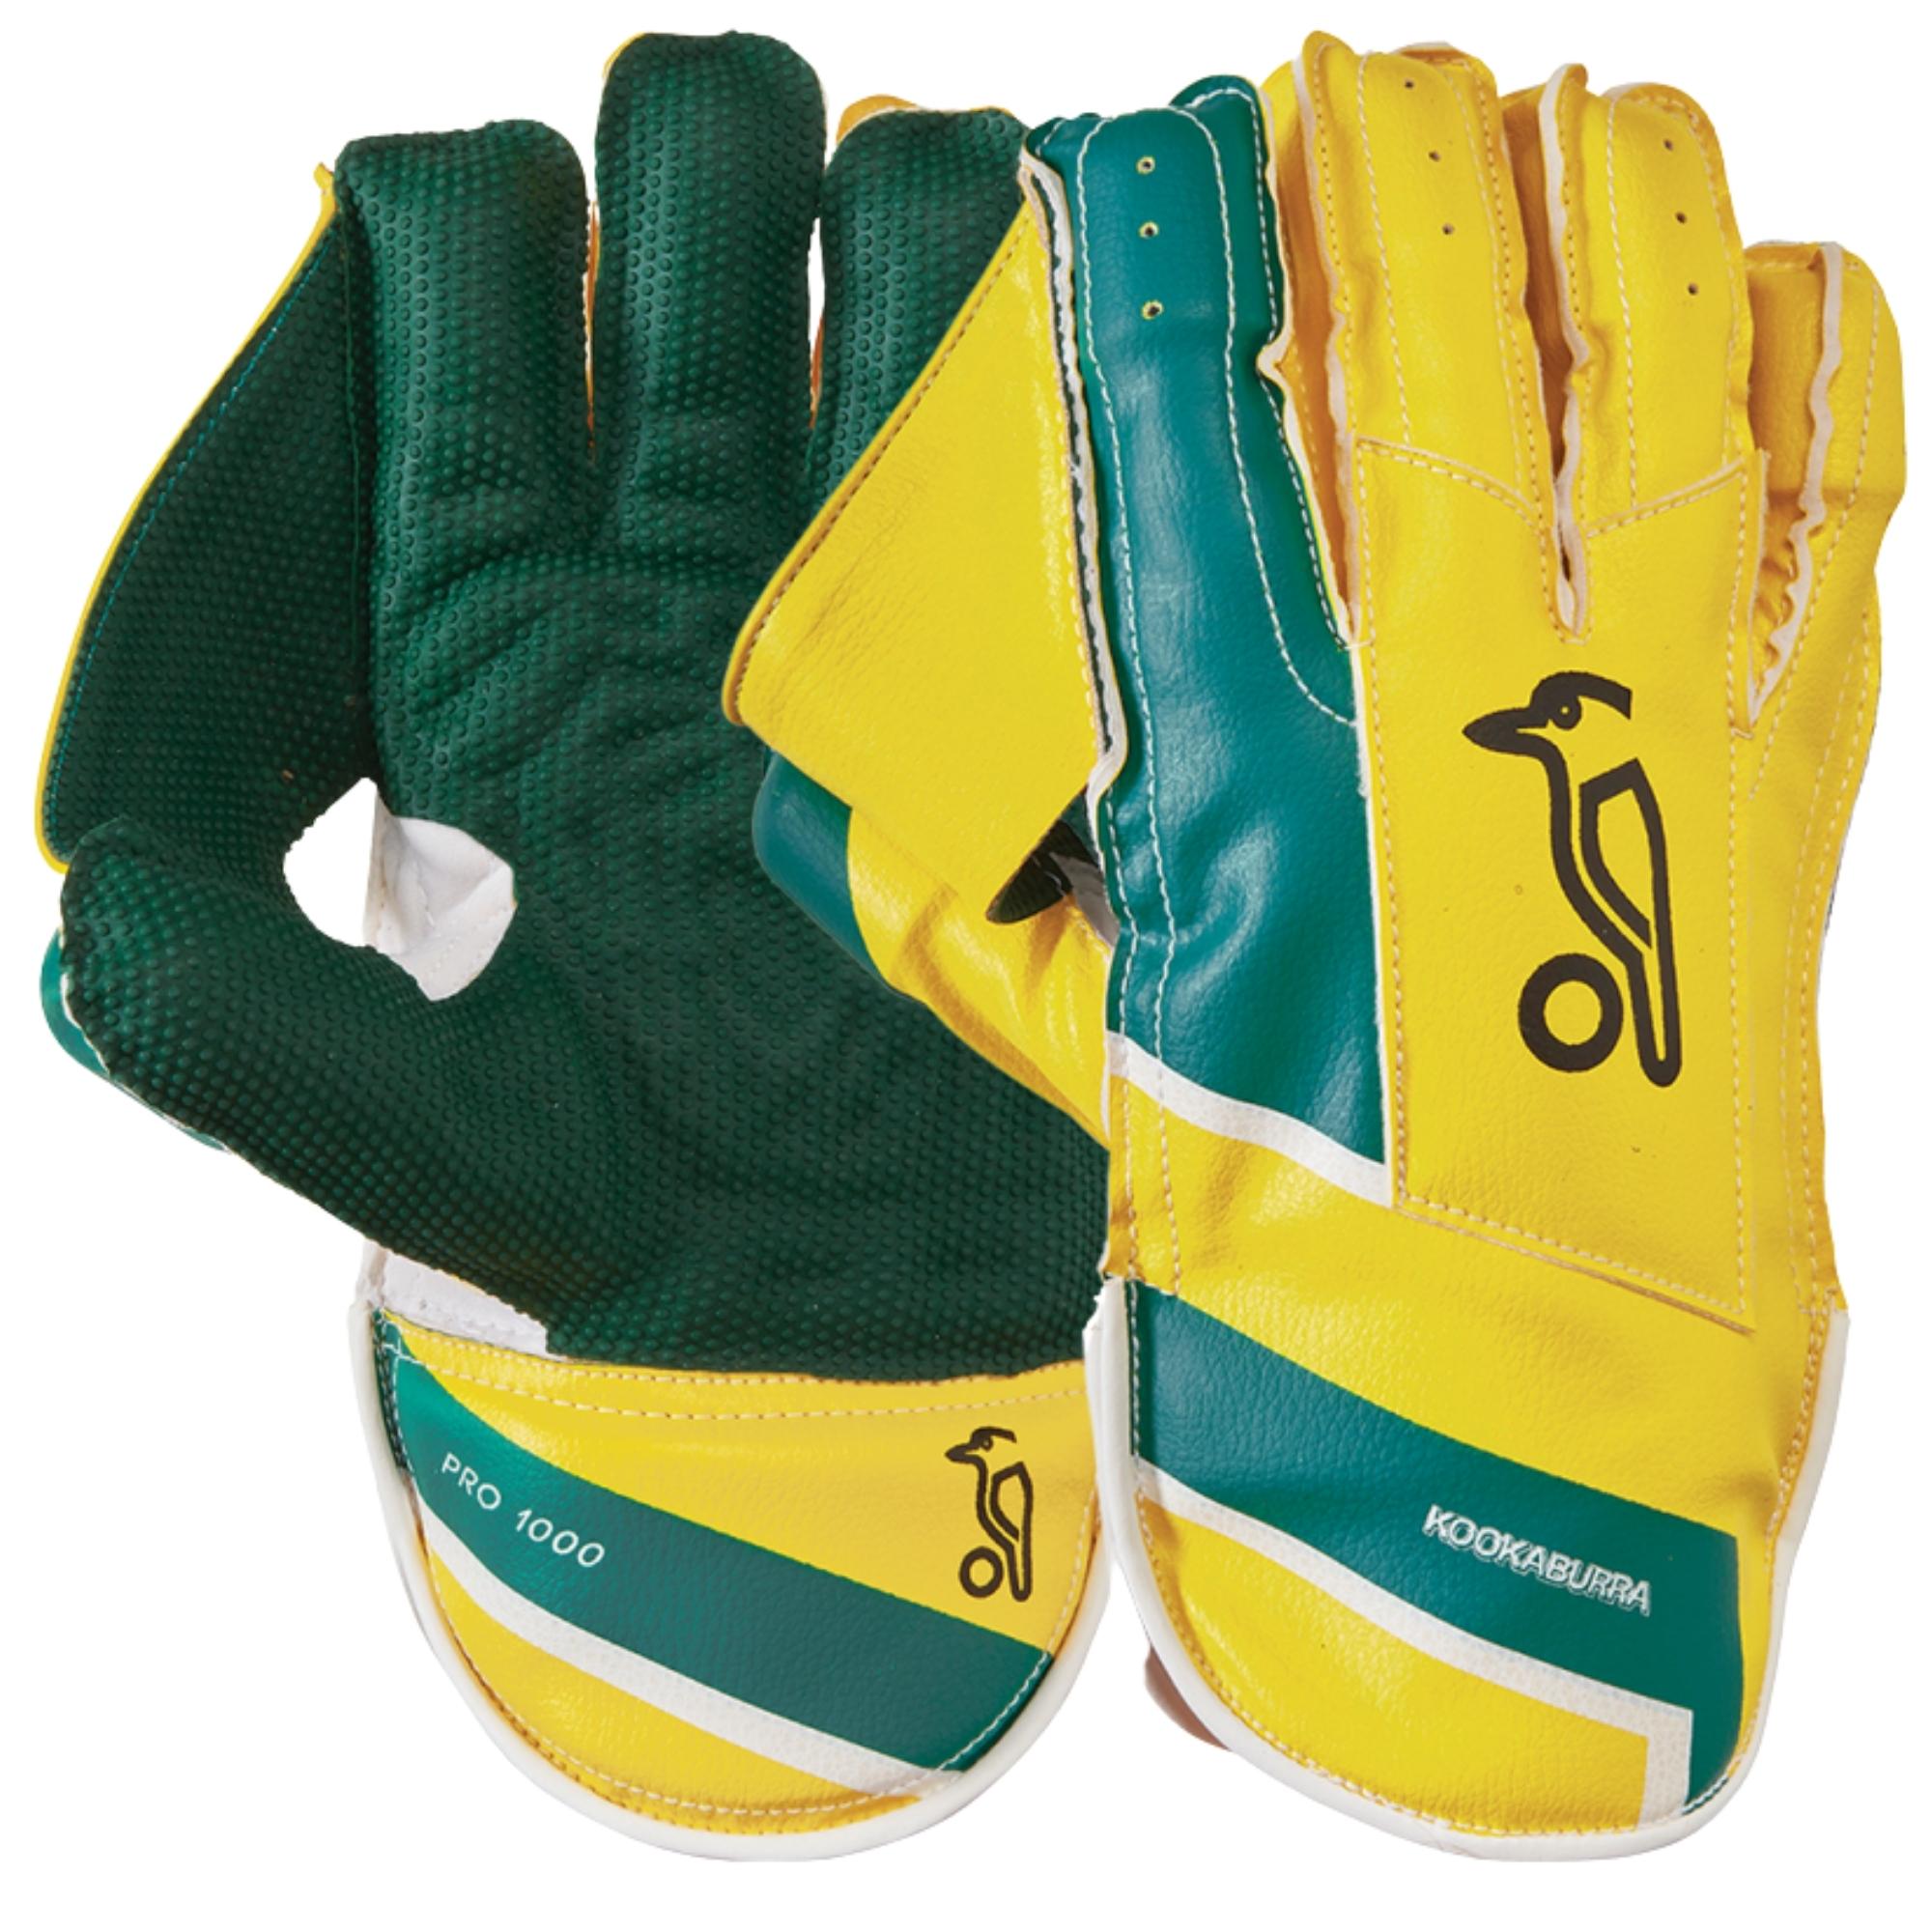 0.05 Kookaburra Wicket Keeping Gloves Pro 1000